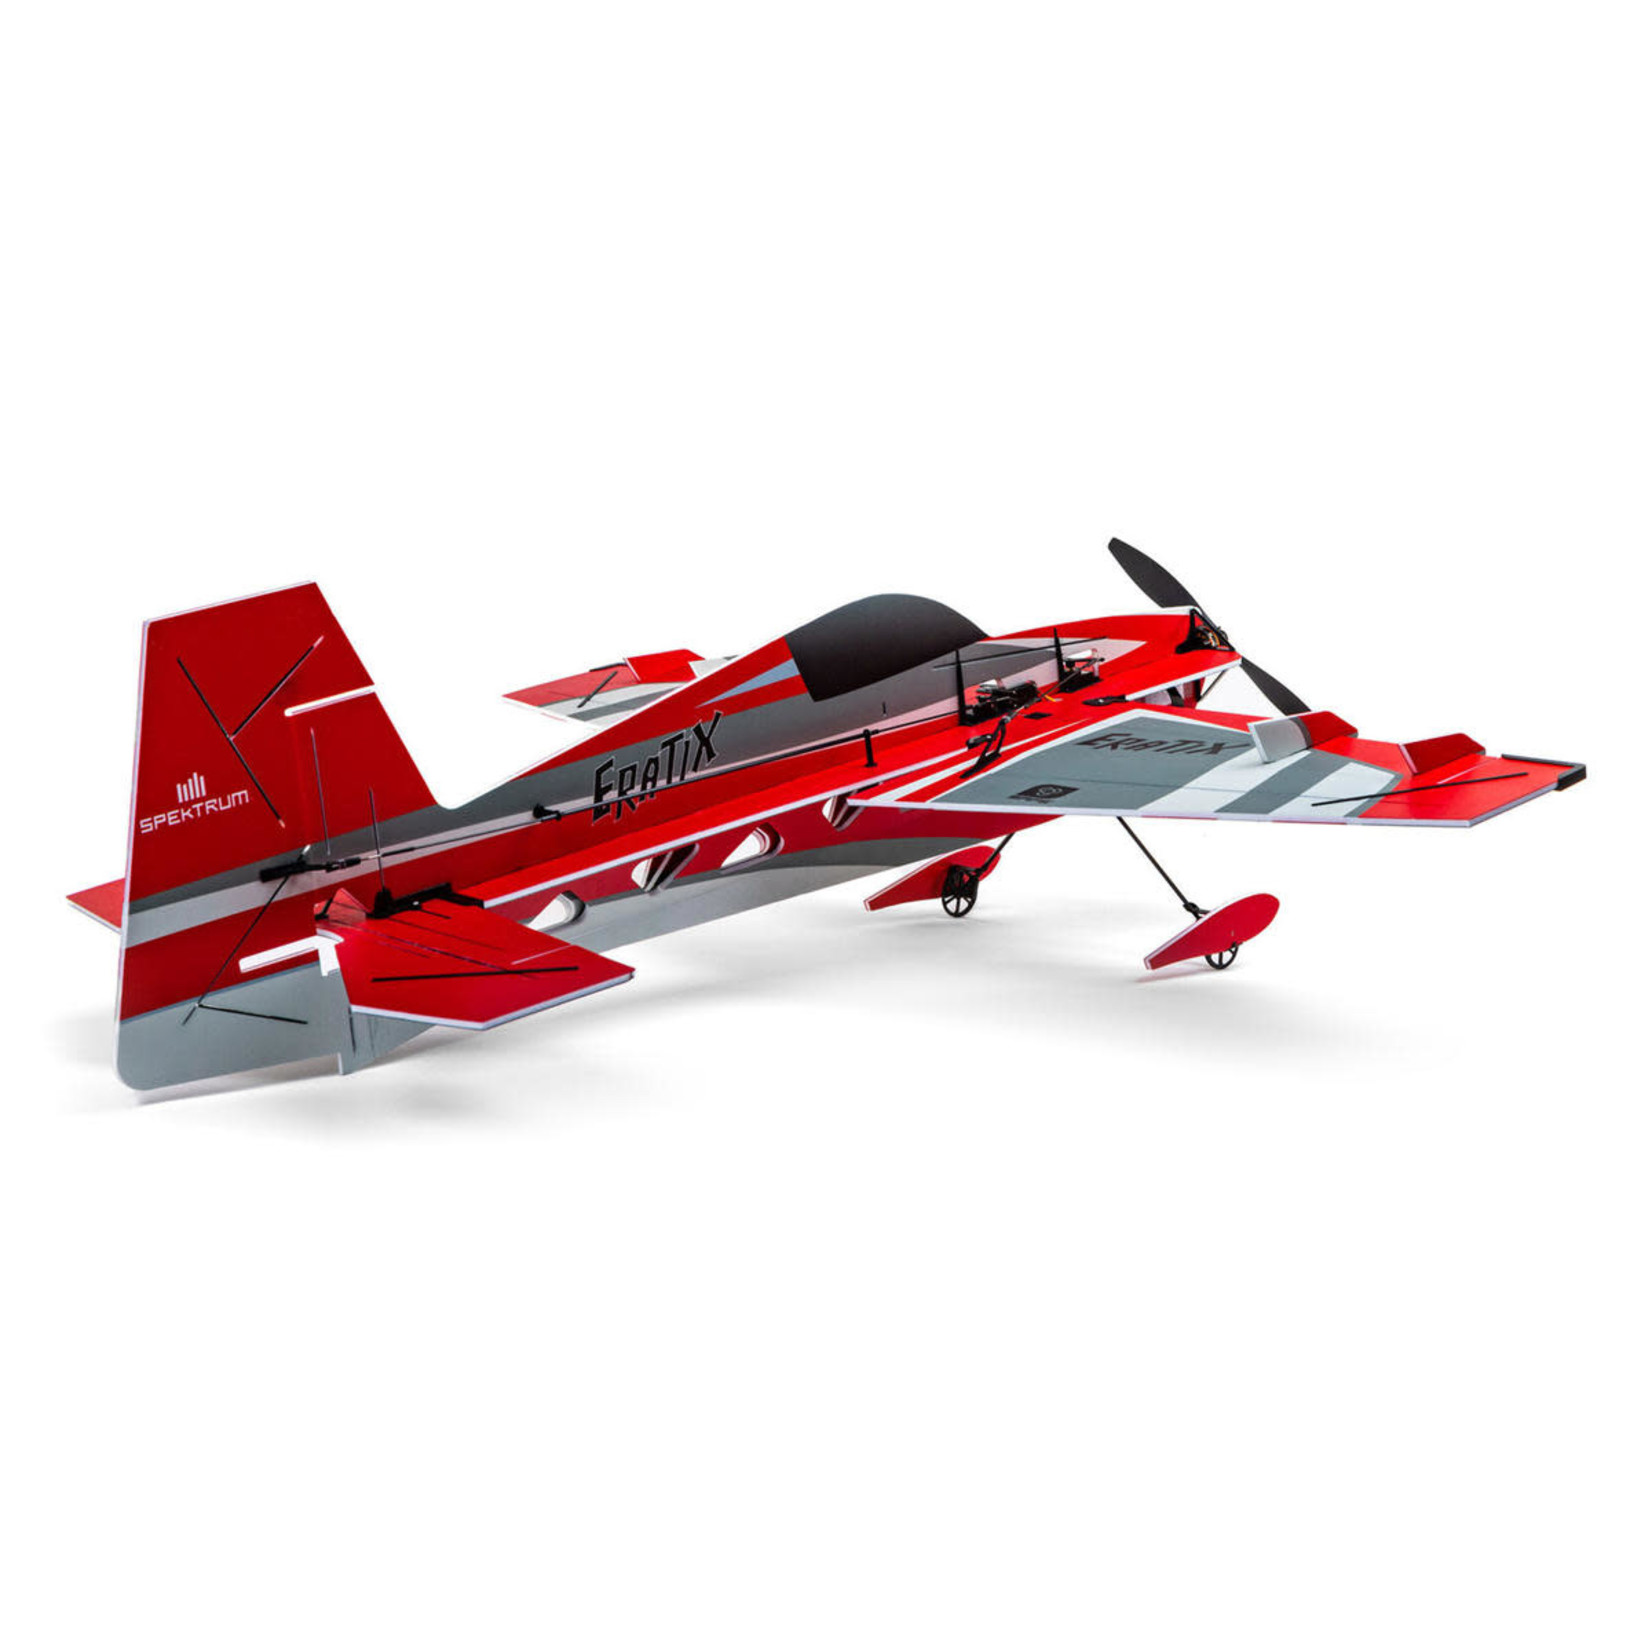 E-flite E-flite Eratix 3D Flat Foamy BNF Basic Electric Airplane w/AS3X & SAFE (860mm) #EFL01950